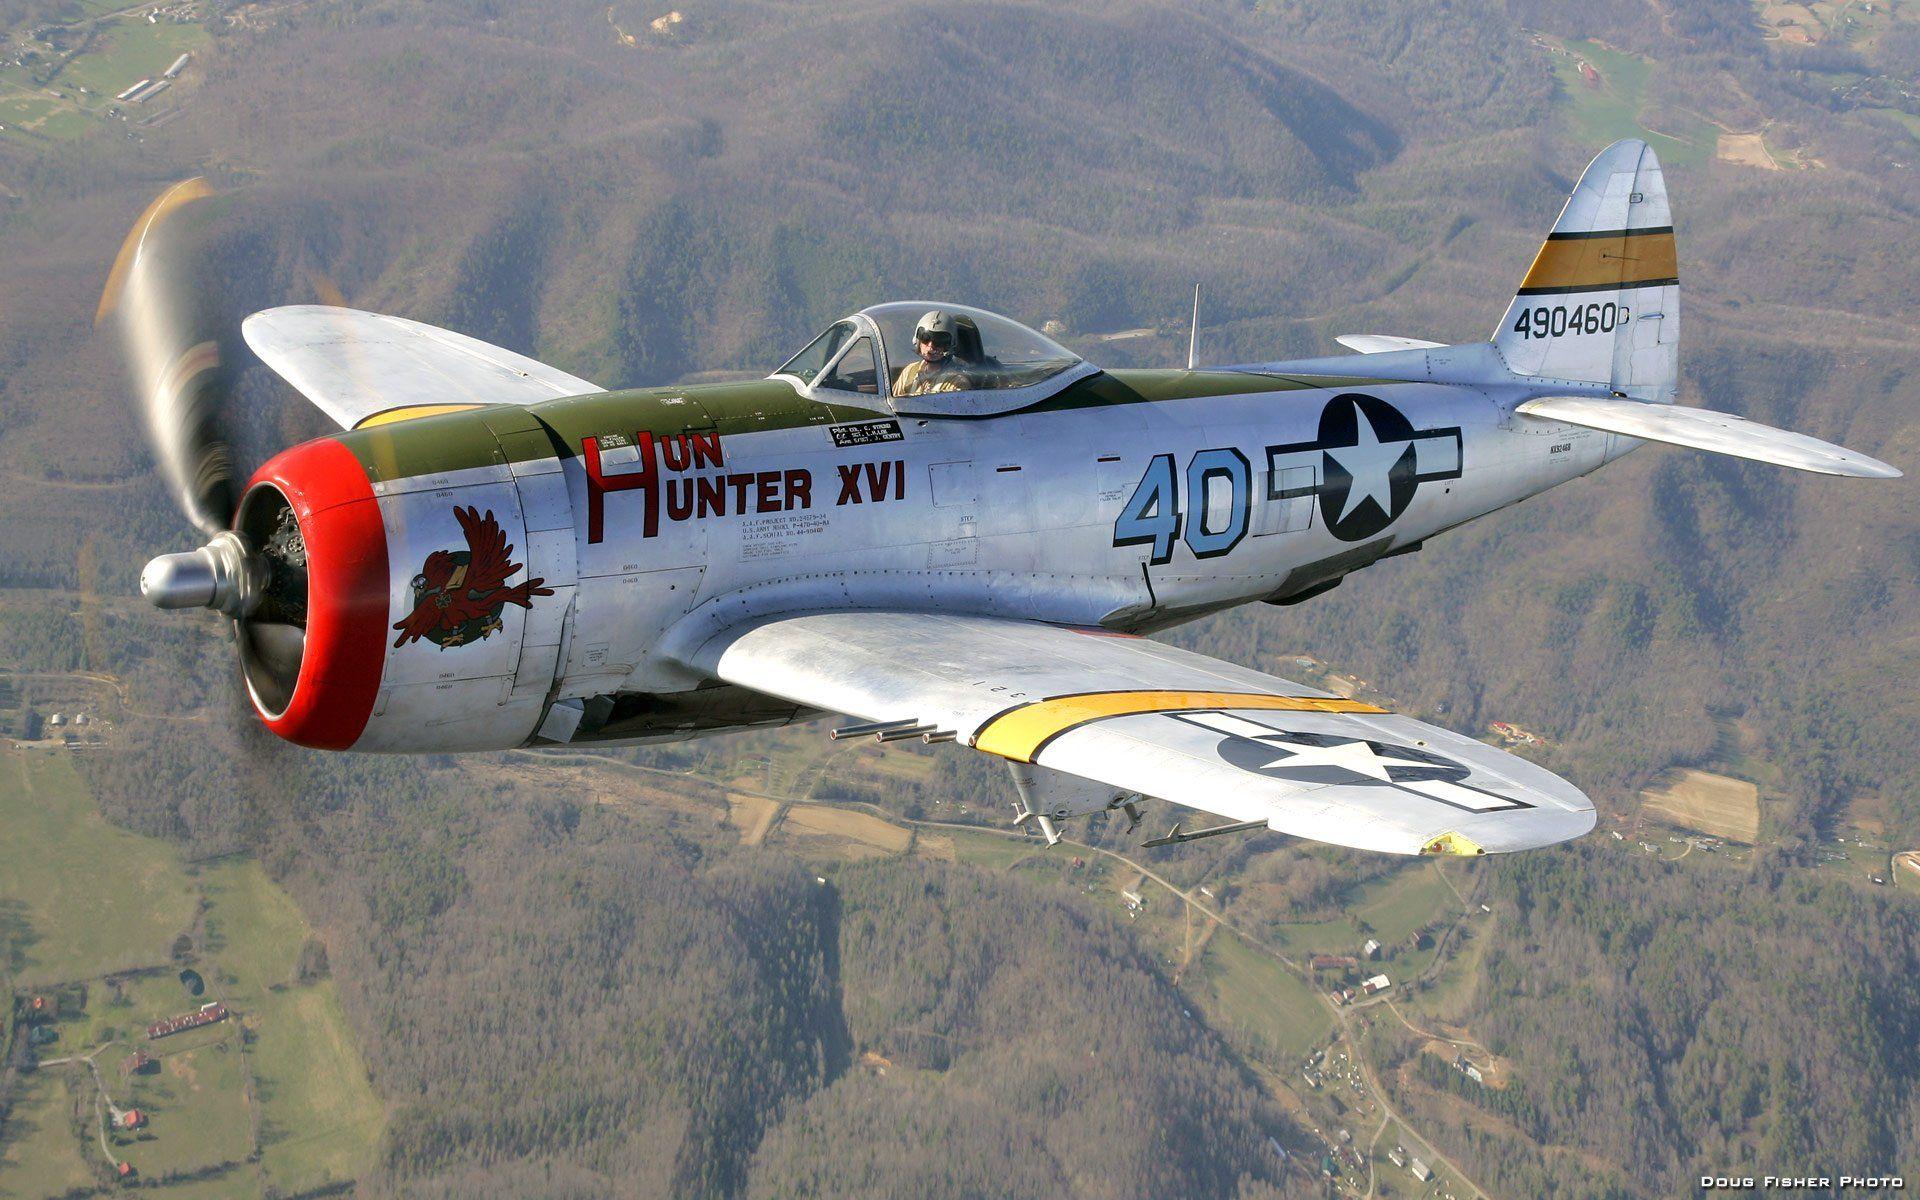 Republic P-47 Thunderbolt Wallpapers